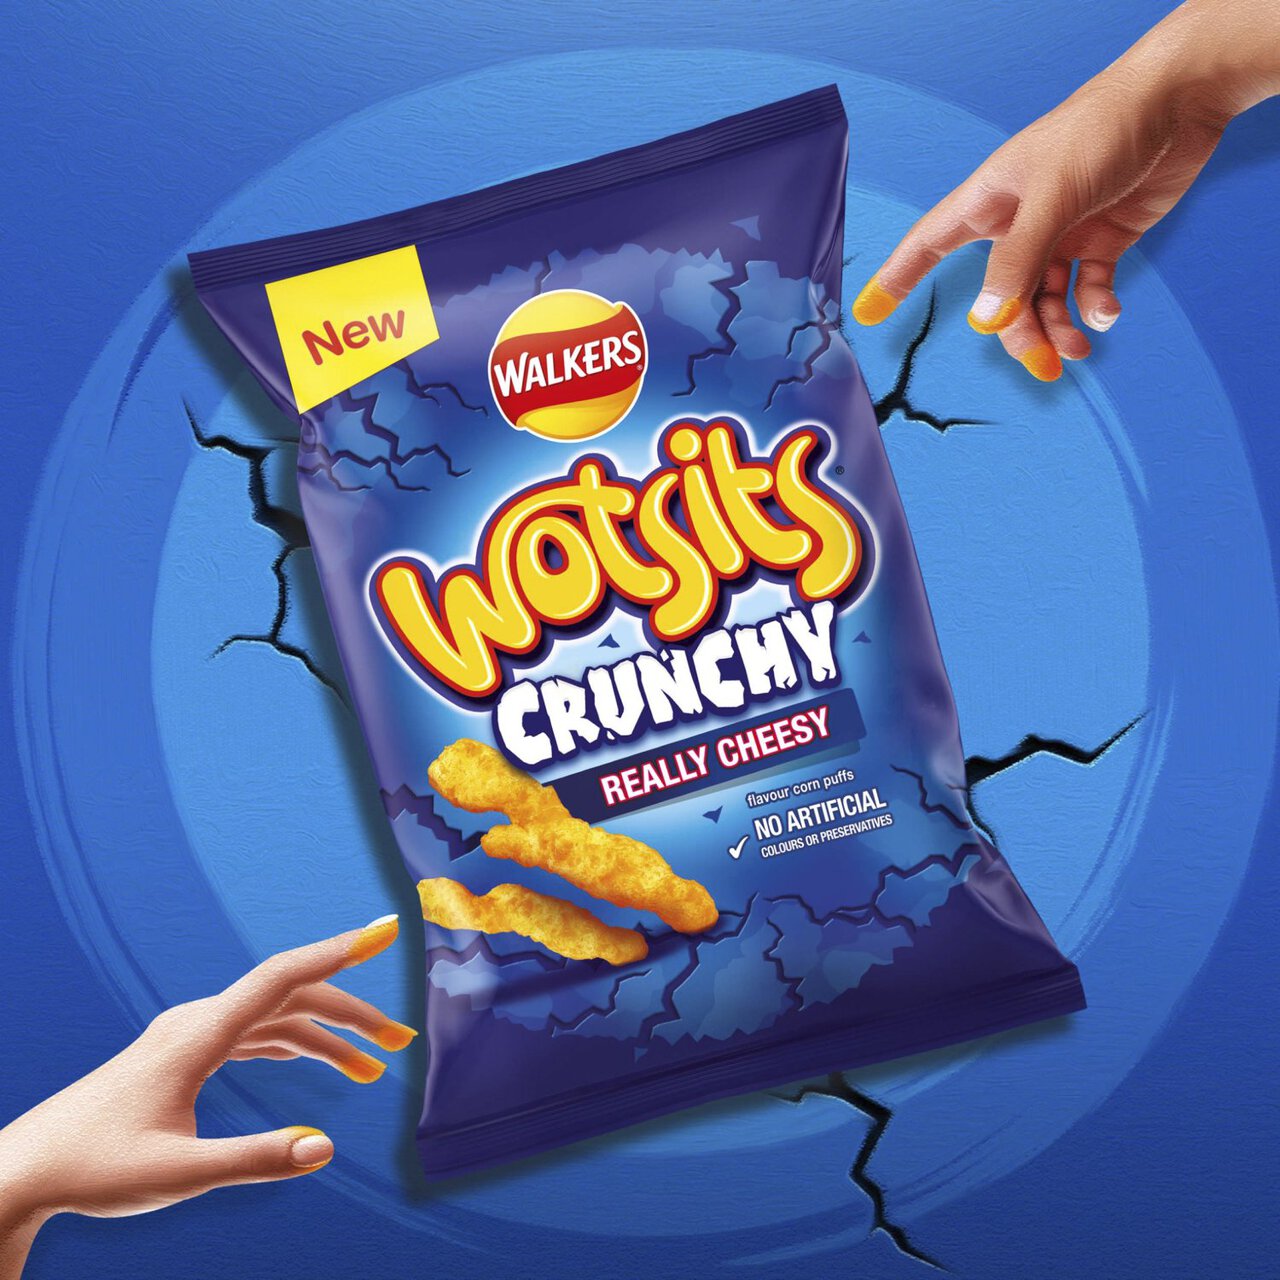 Walkers Wotsits Crunchy Really Cheesy Snacks 140g